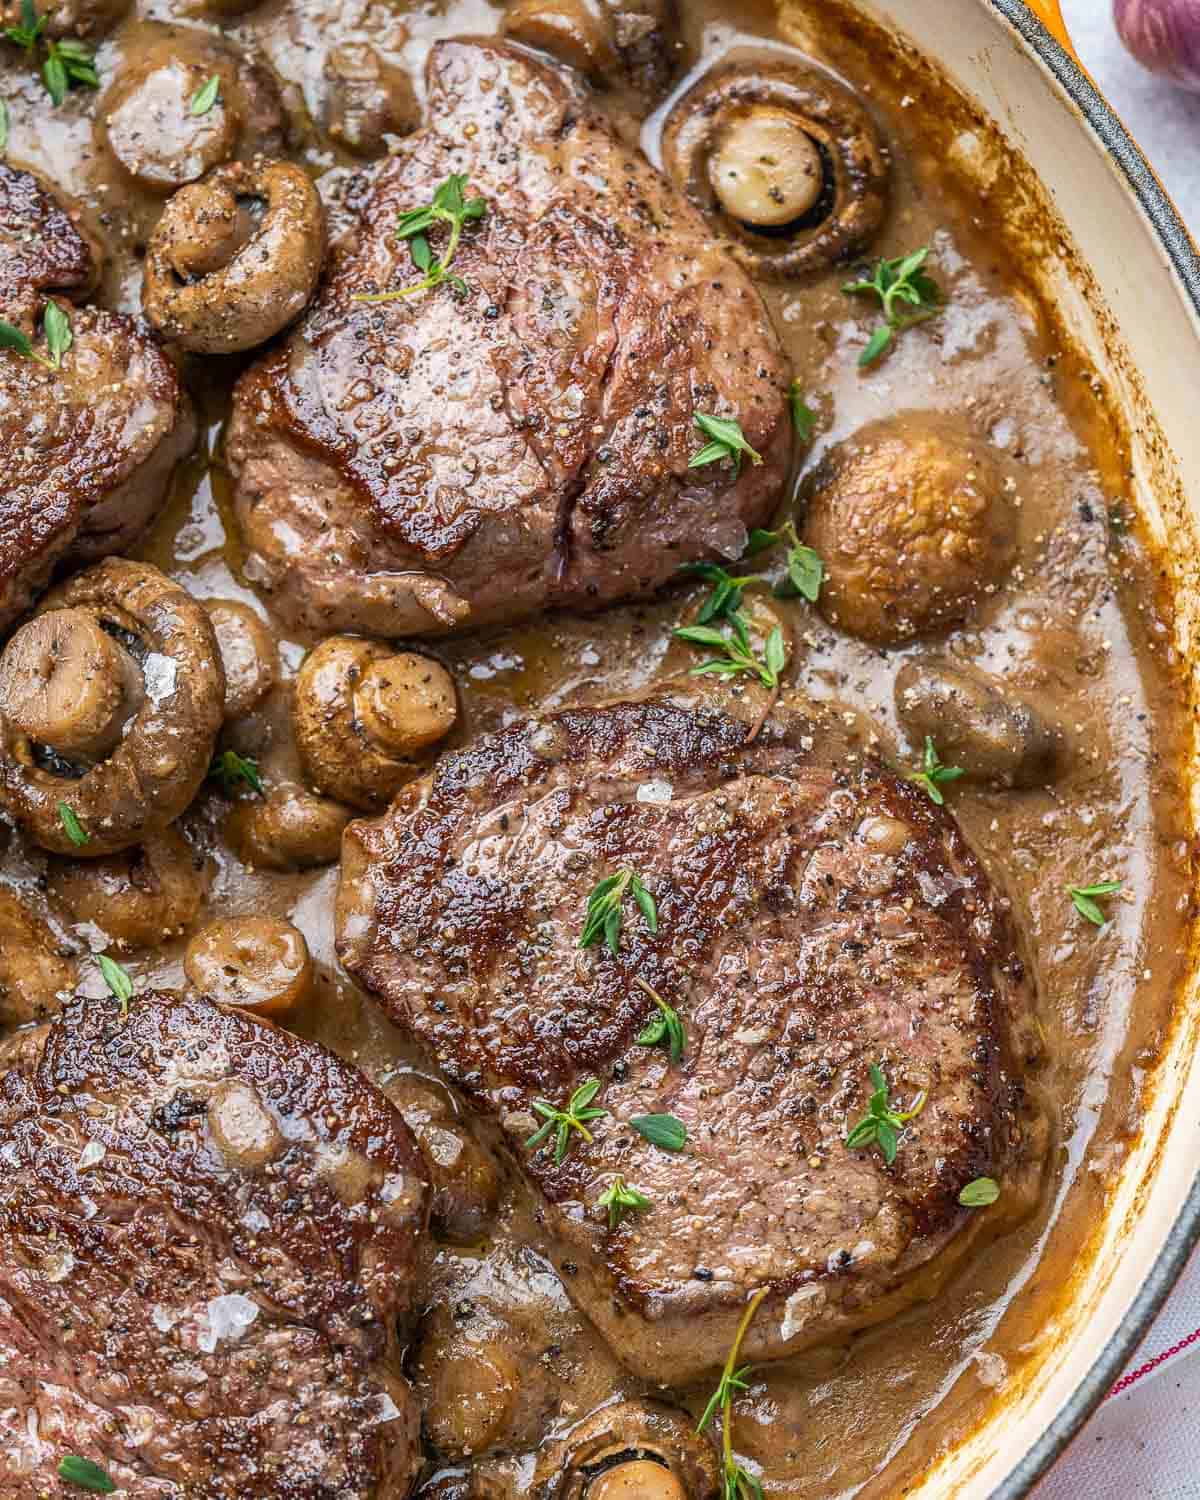 Filet steaks in pan with mushrooms and herbs. 